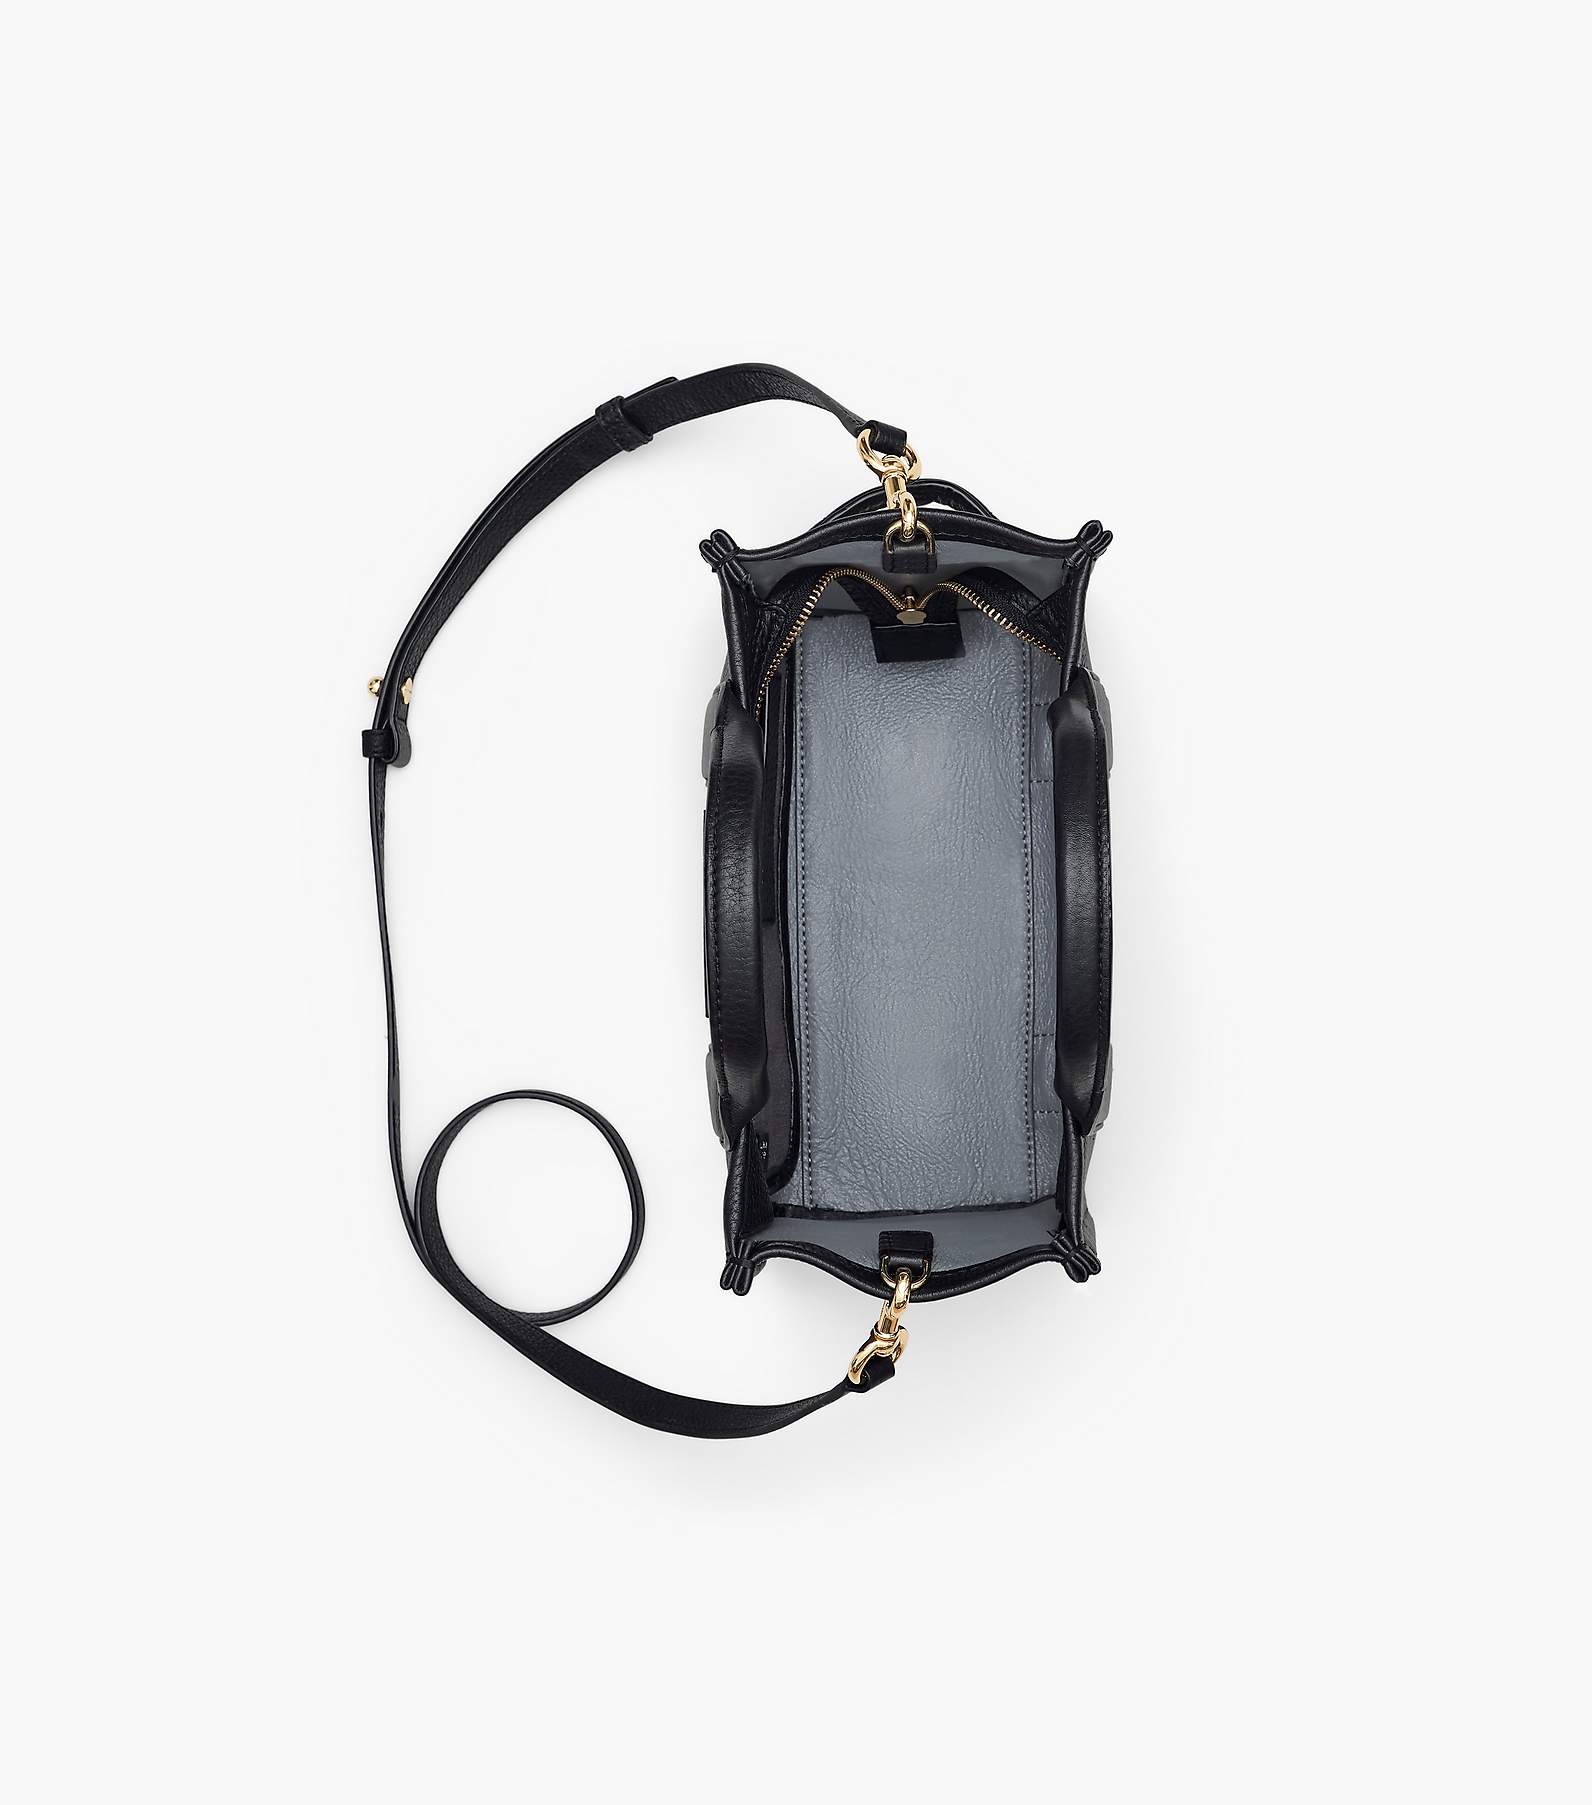 Marc Jacobs The Tote Bag  Mini Leather & Small Jacquard 